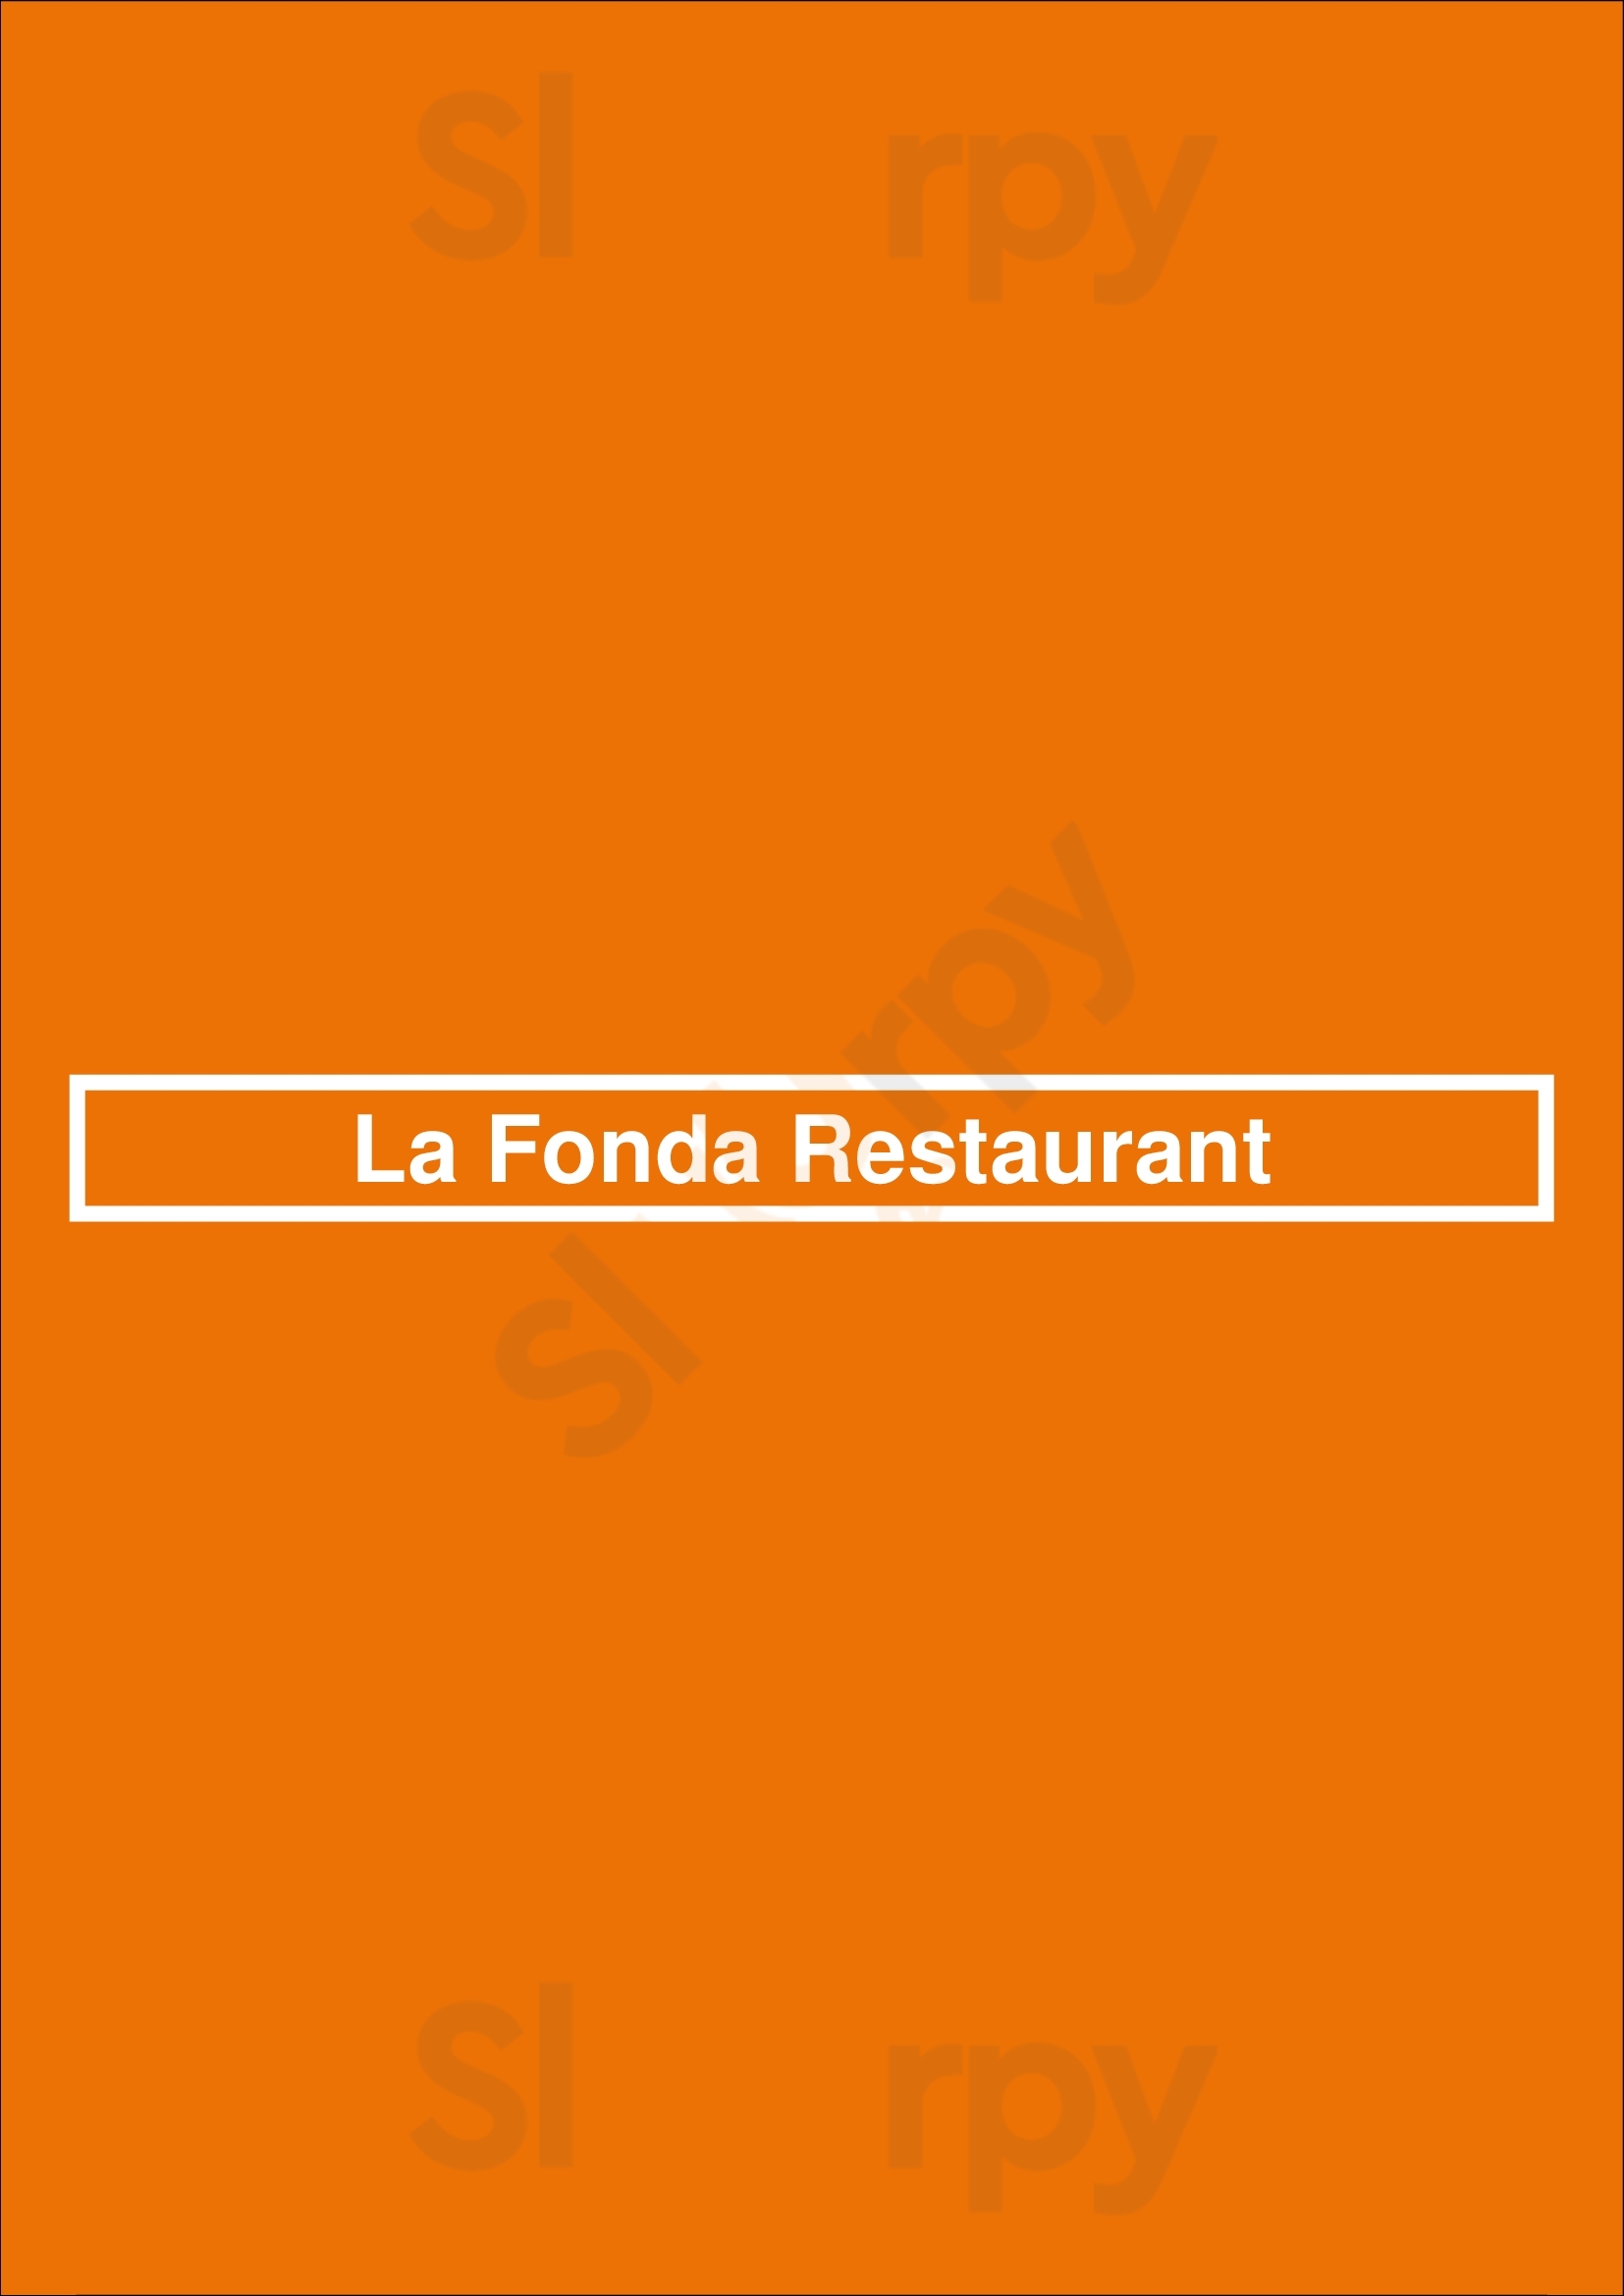 La Fonda Restaurant Bridgeport Menu - 1